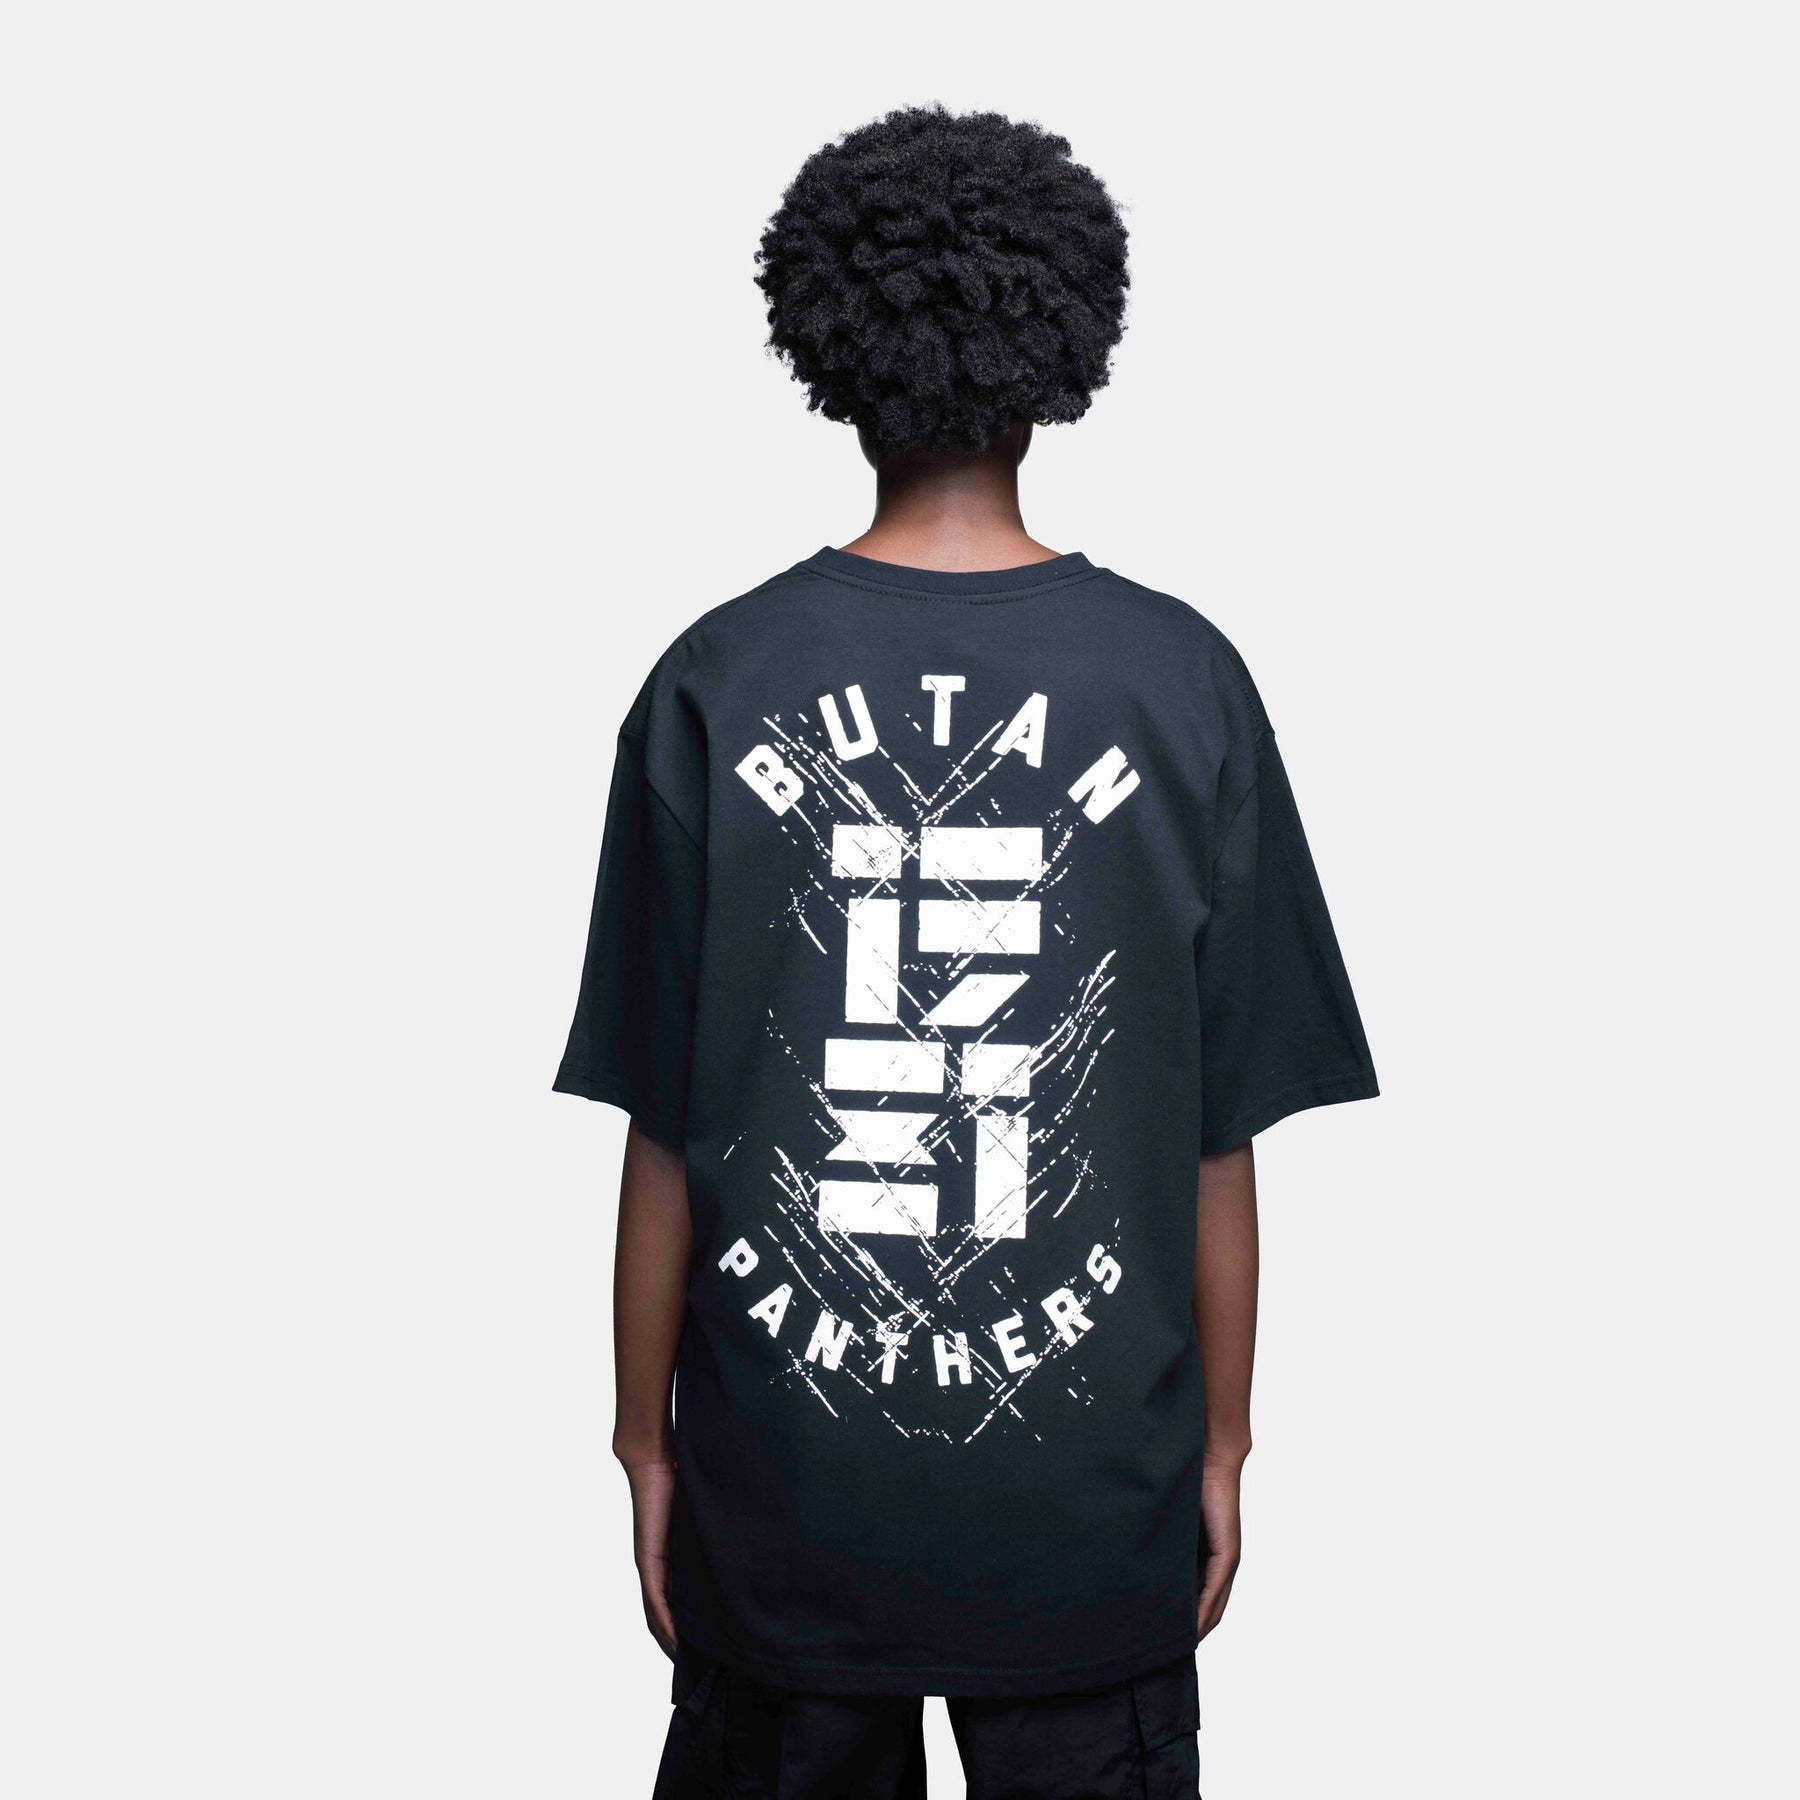 Butan Panthers | Clawed T-shirt